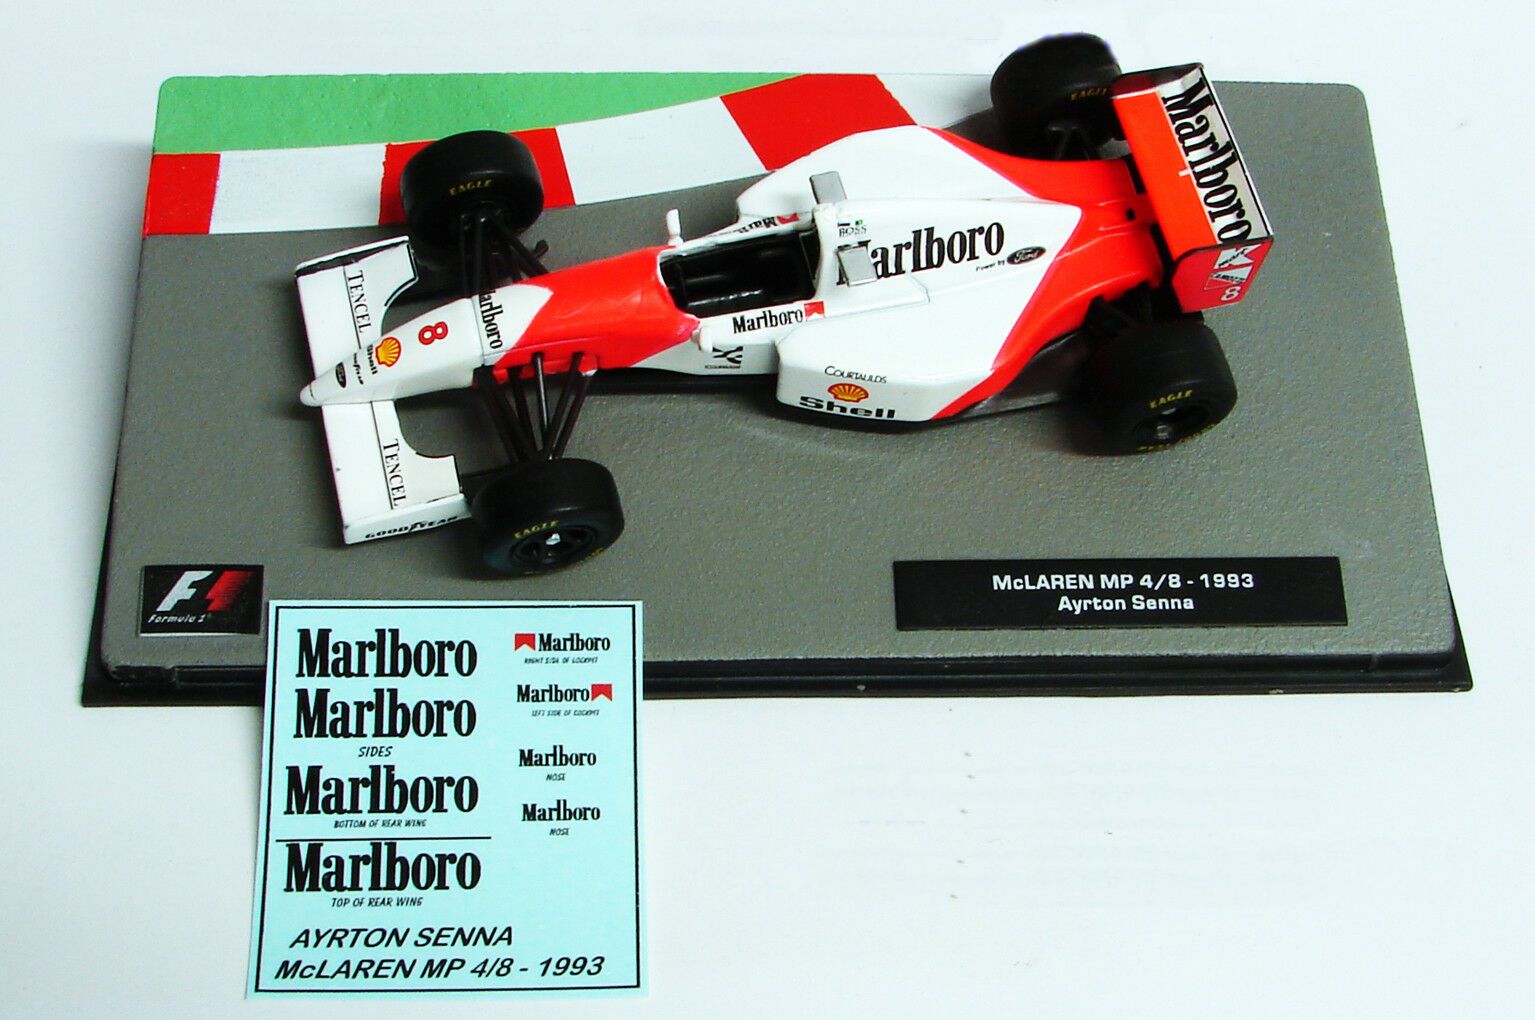 Decals "MARLBORO" - McLaren MP4/8 1993/ Ayrton Senna